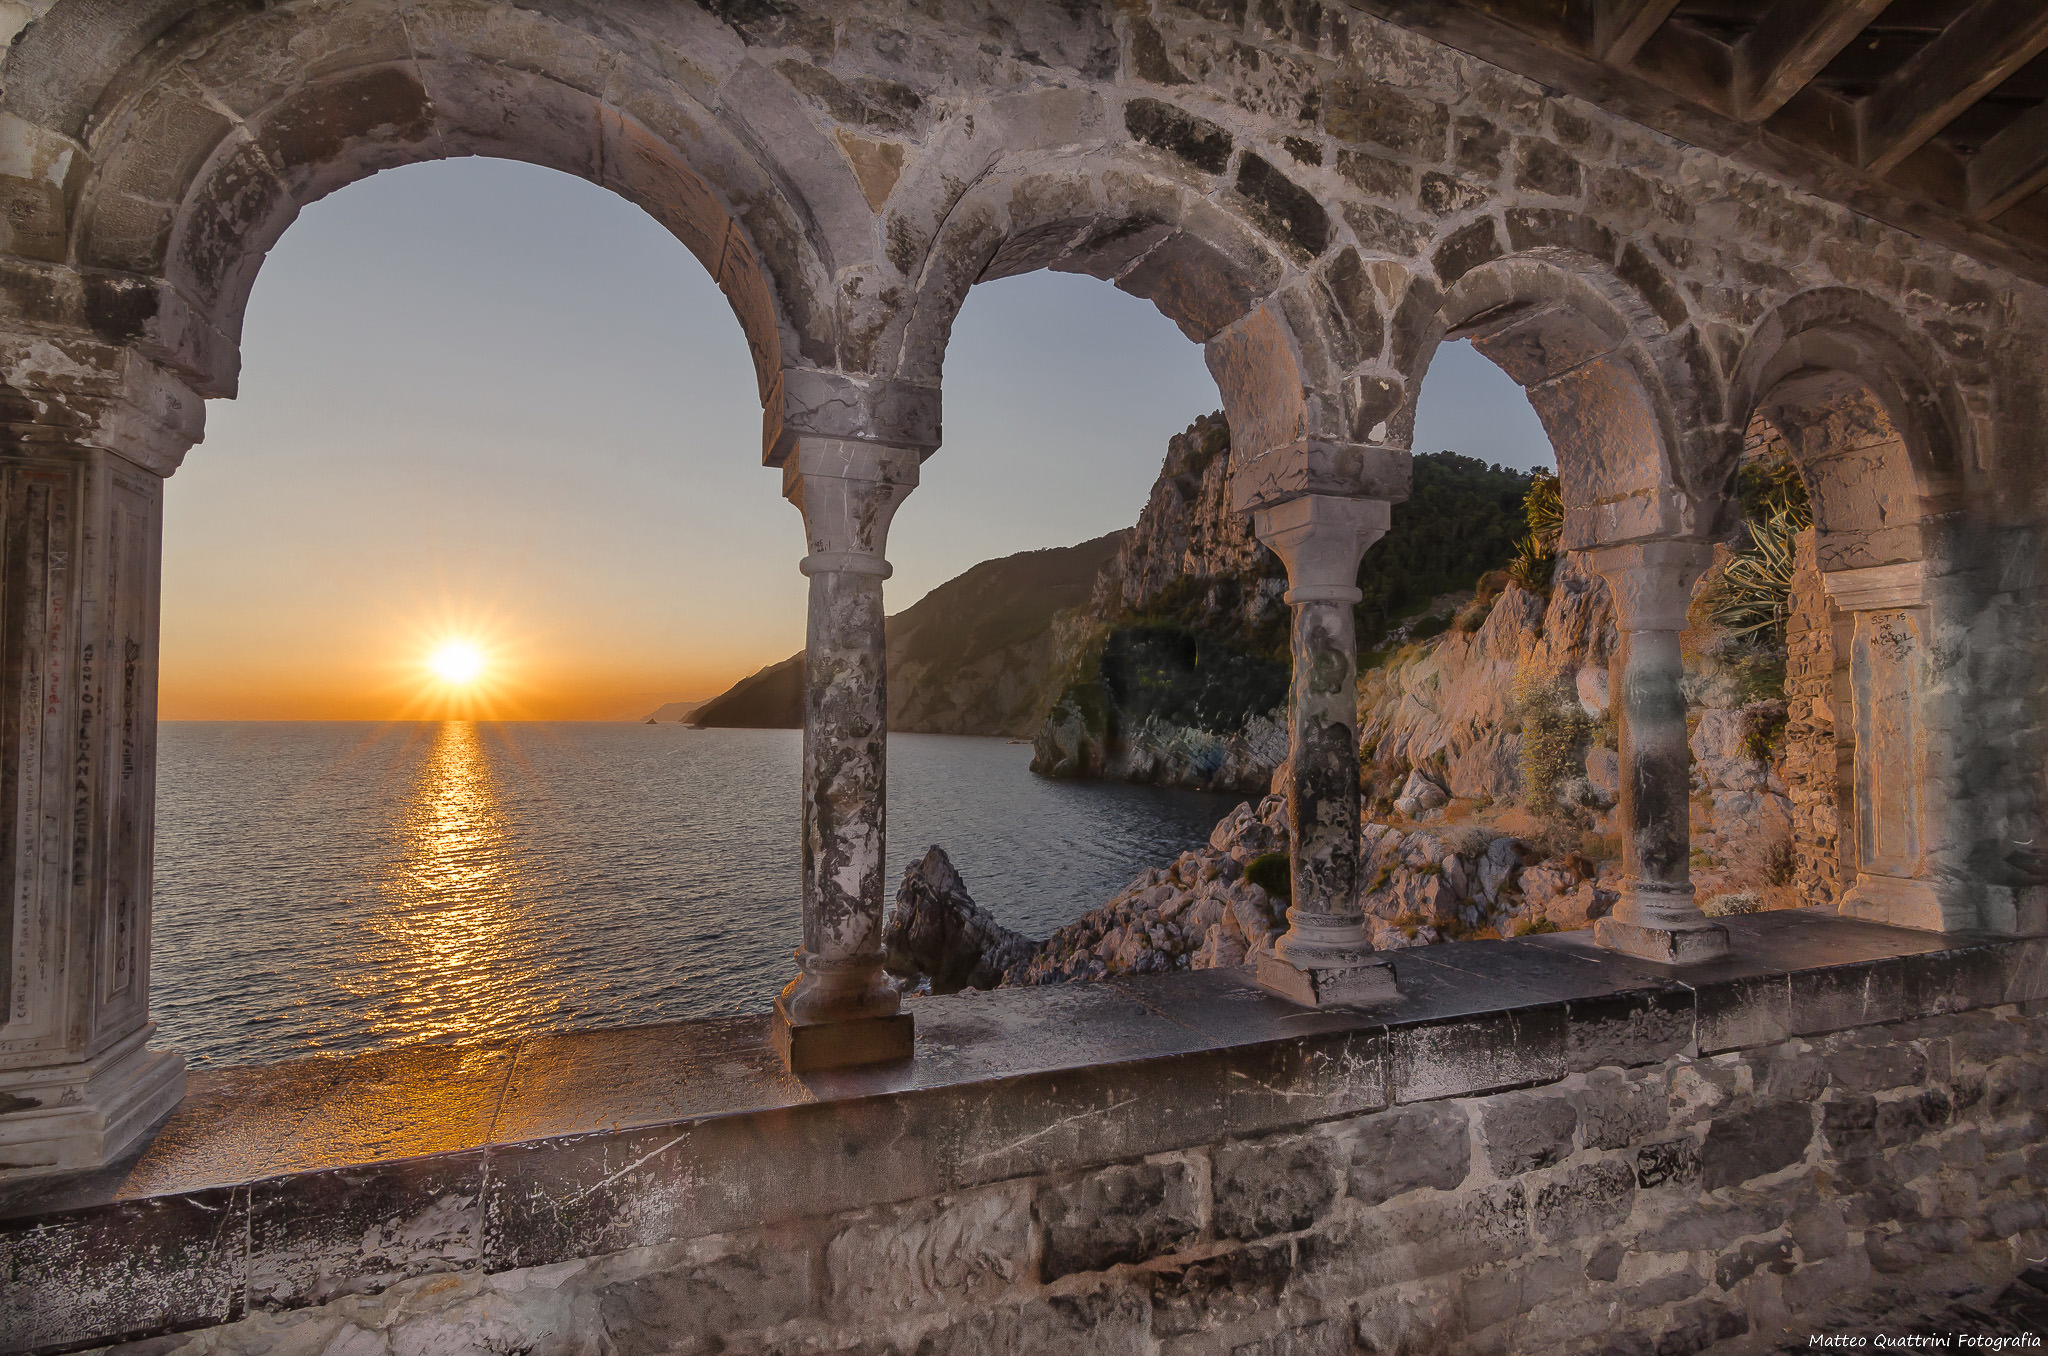 General 2048x1356 nature landscape water Italy Sun sea arch cliff ancient architecture rocks